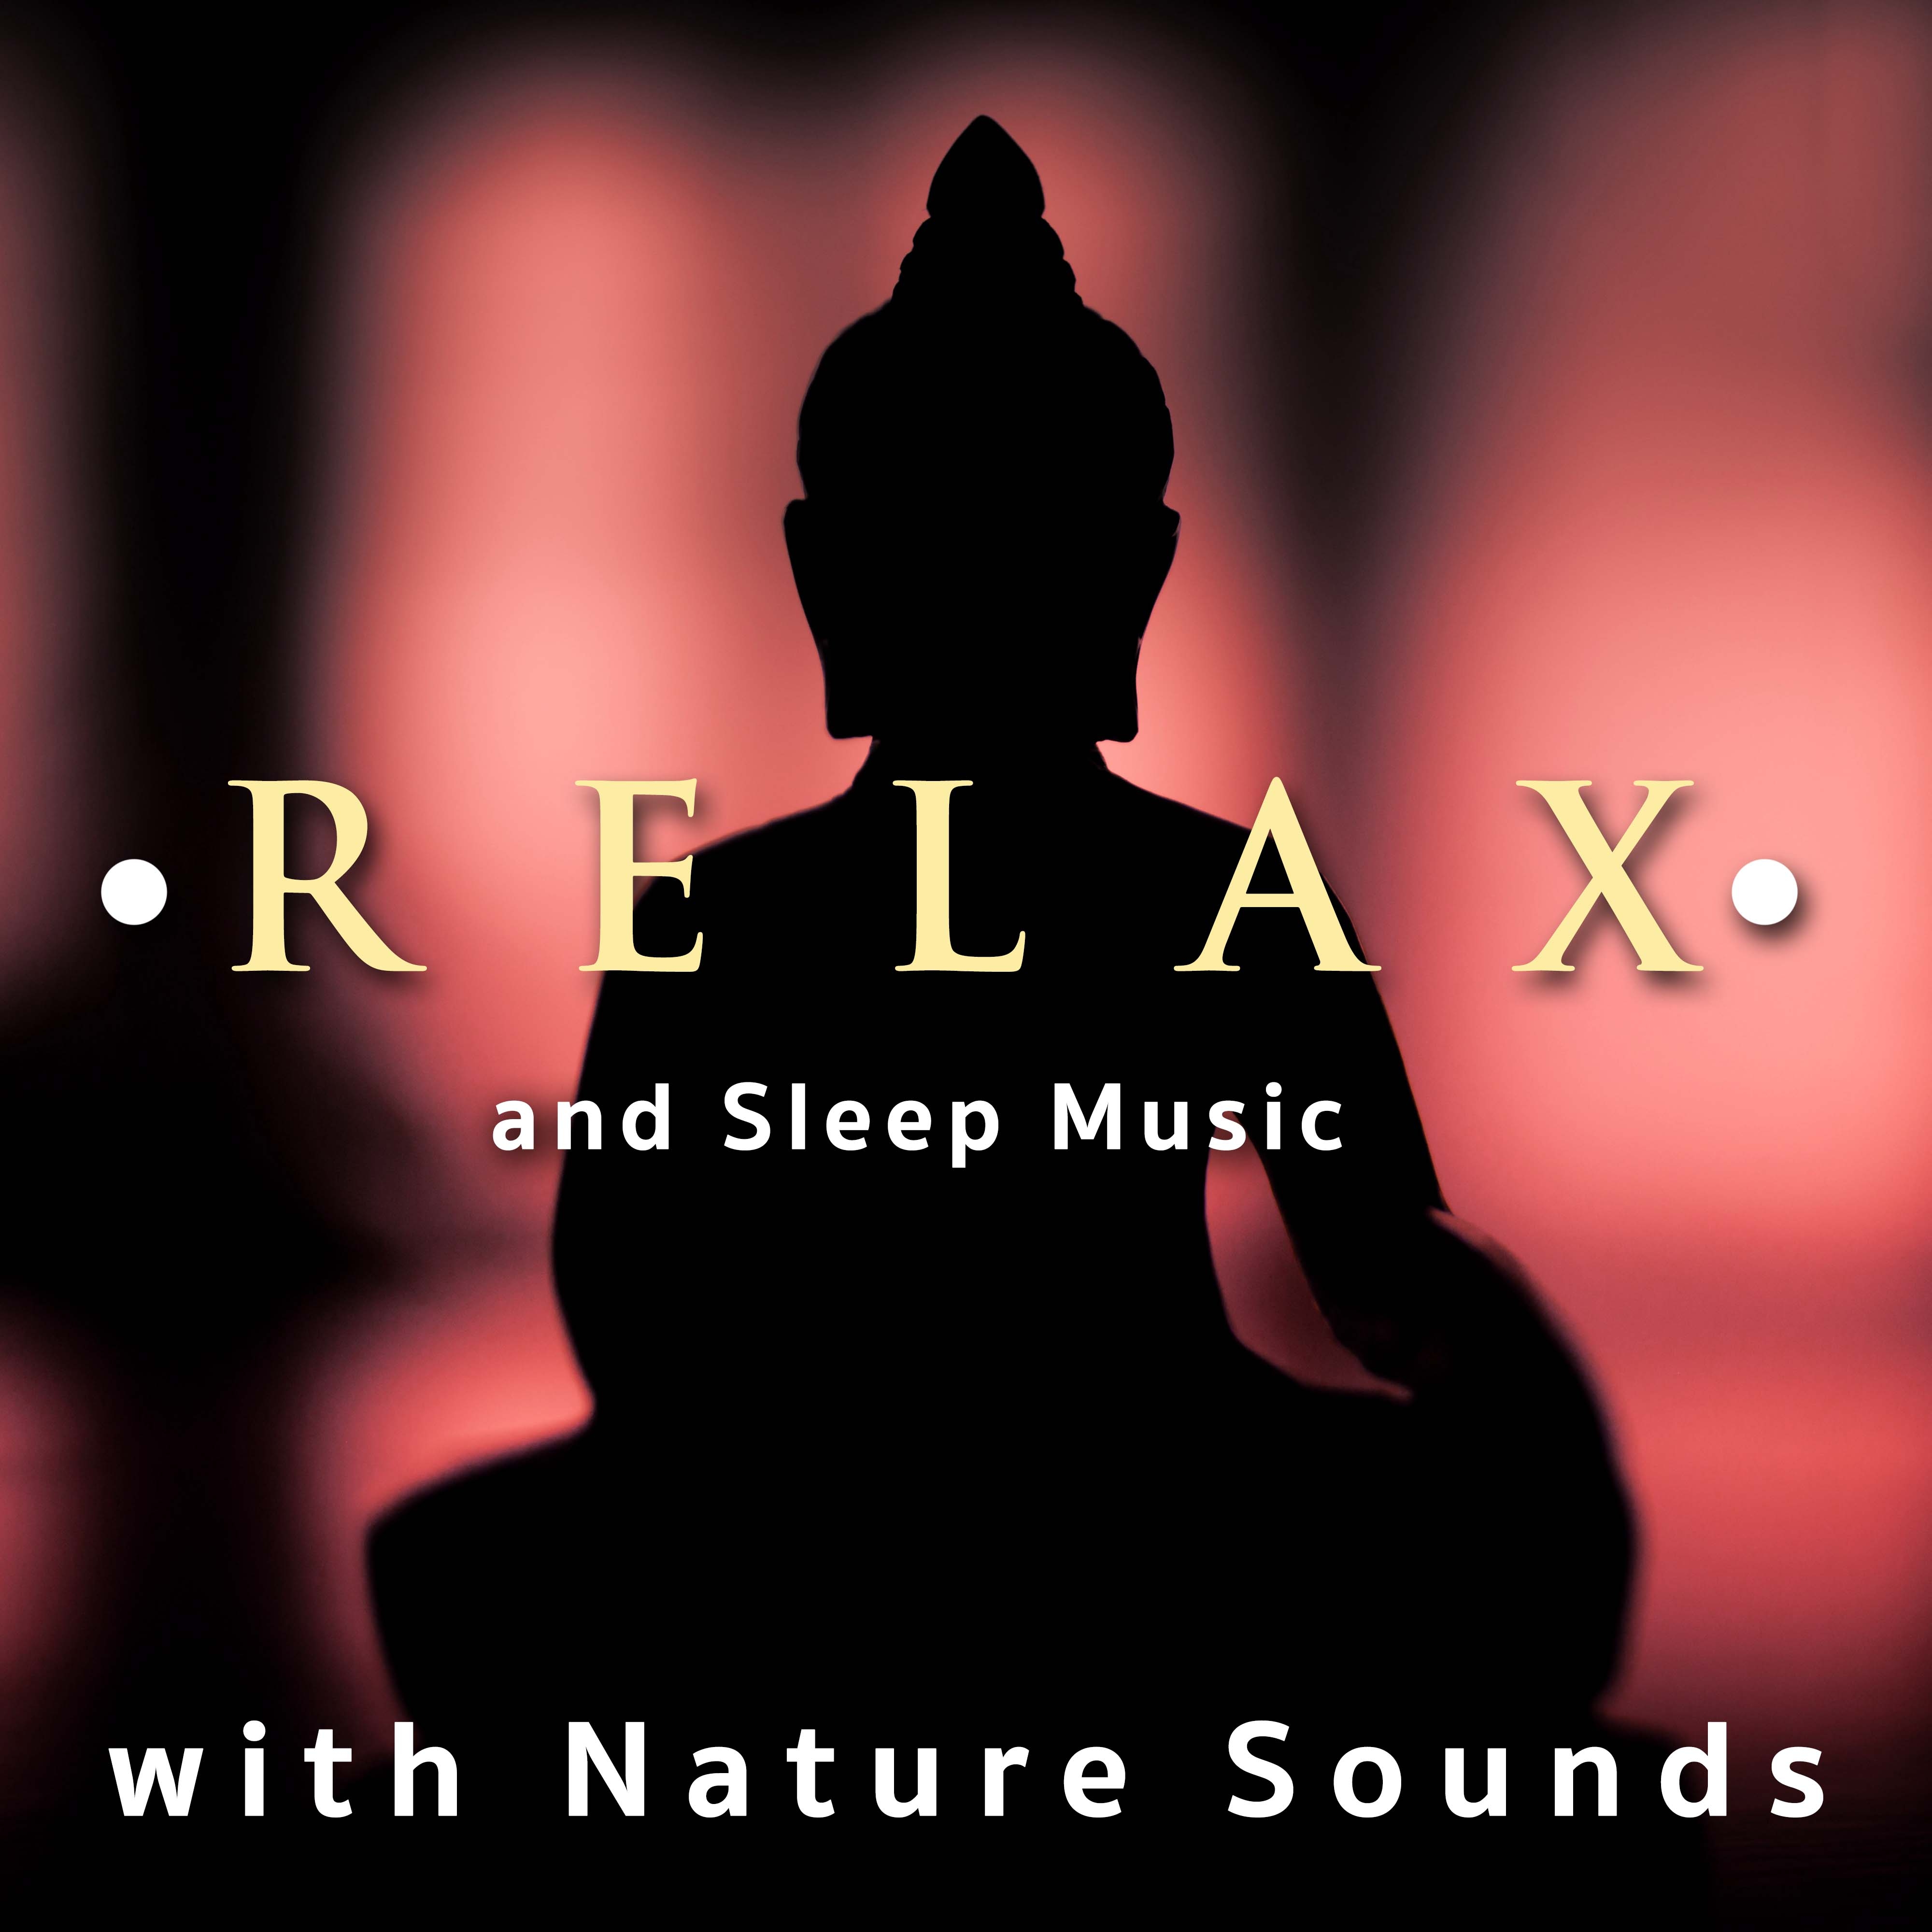 Meditation: Oriental Sounds